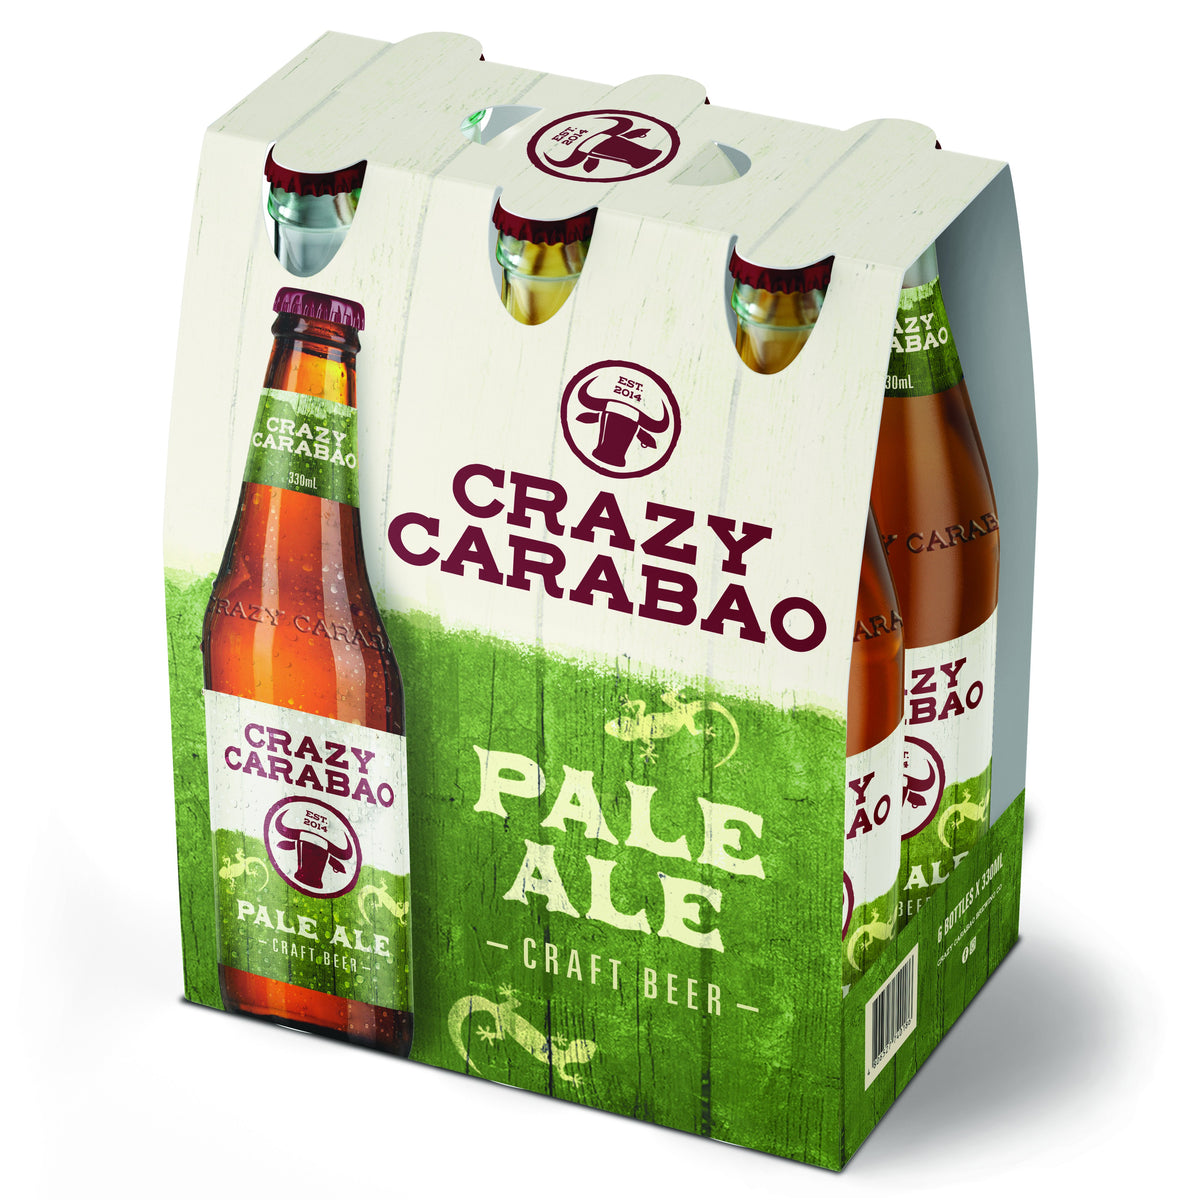 Crazy Carabao Pale Ale Craft Beer 330ml bottle 6-pack